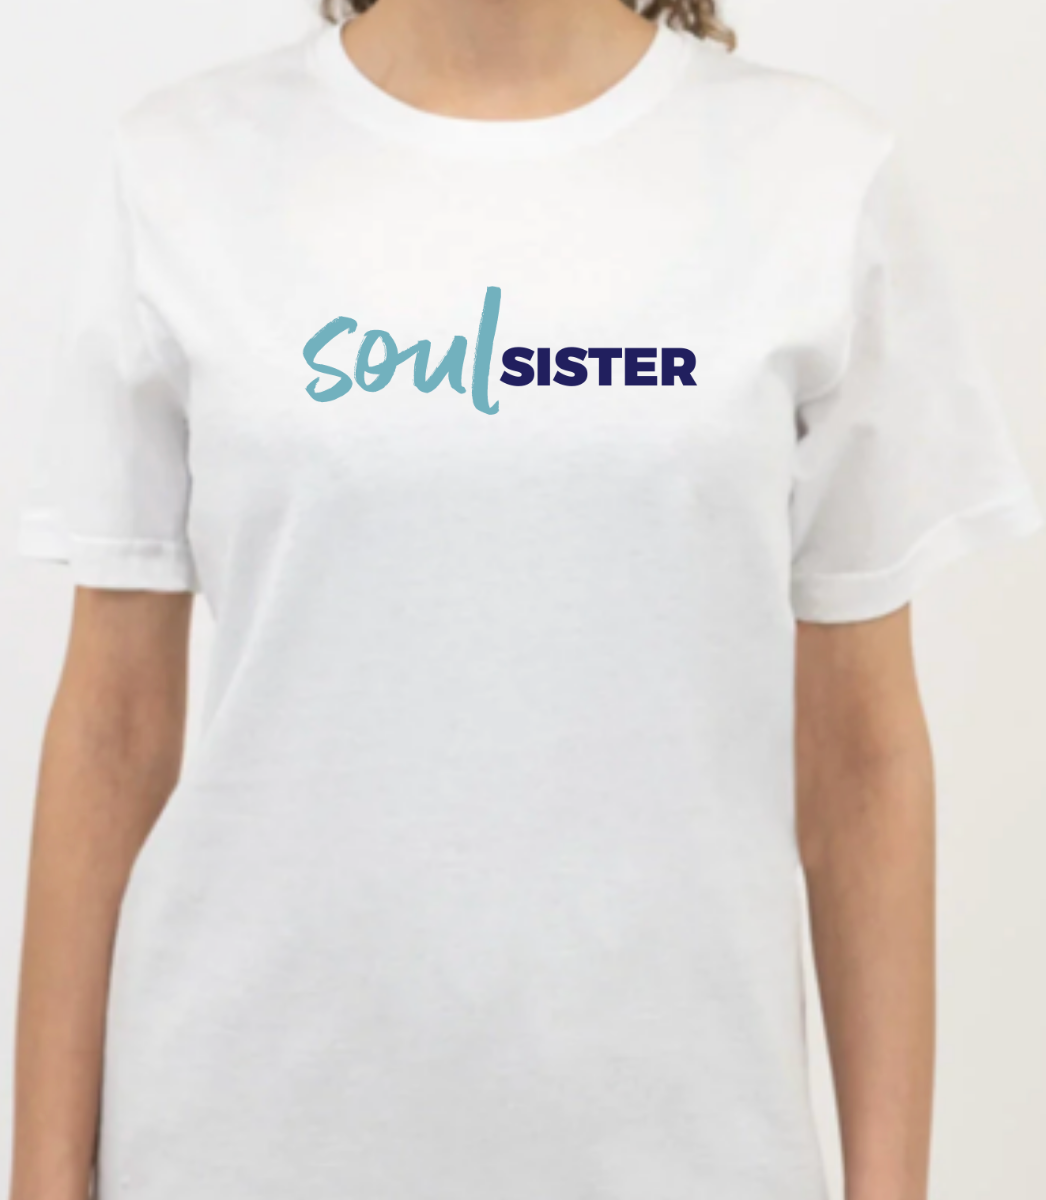 SOUL SISTER women's white t-shirt